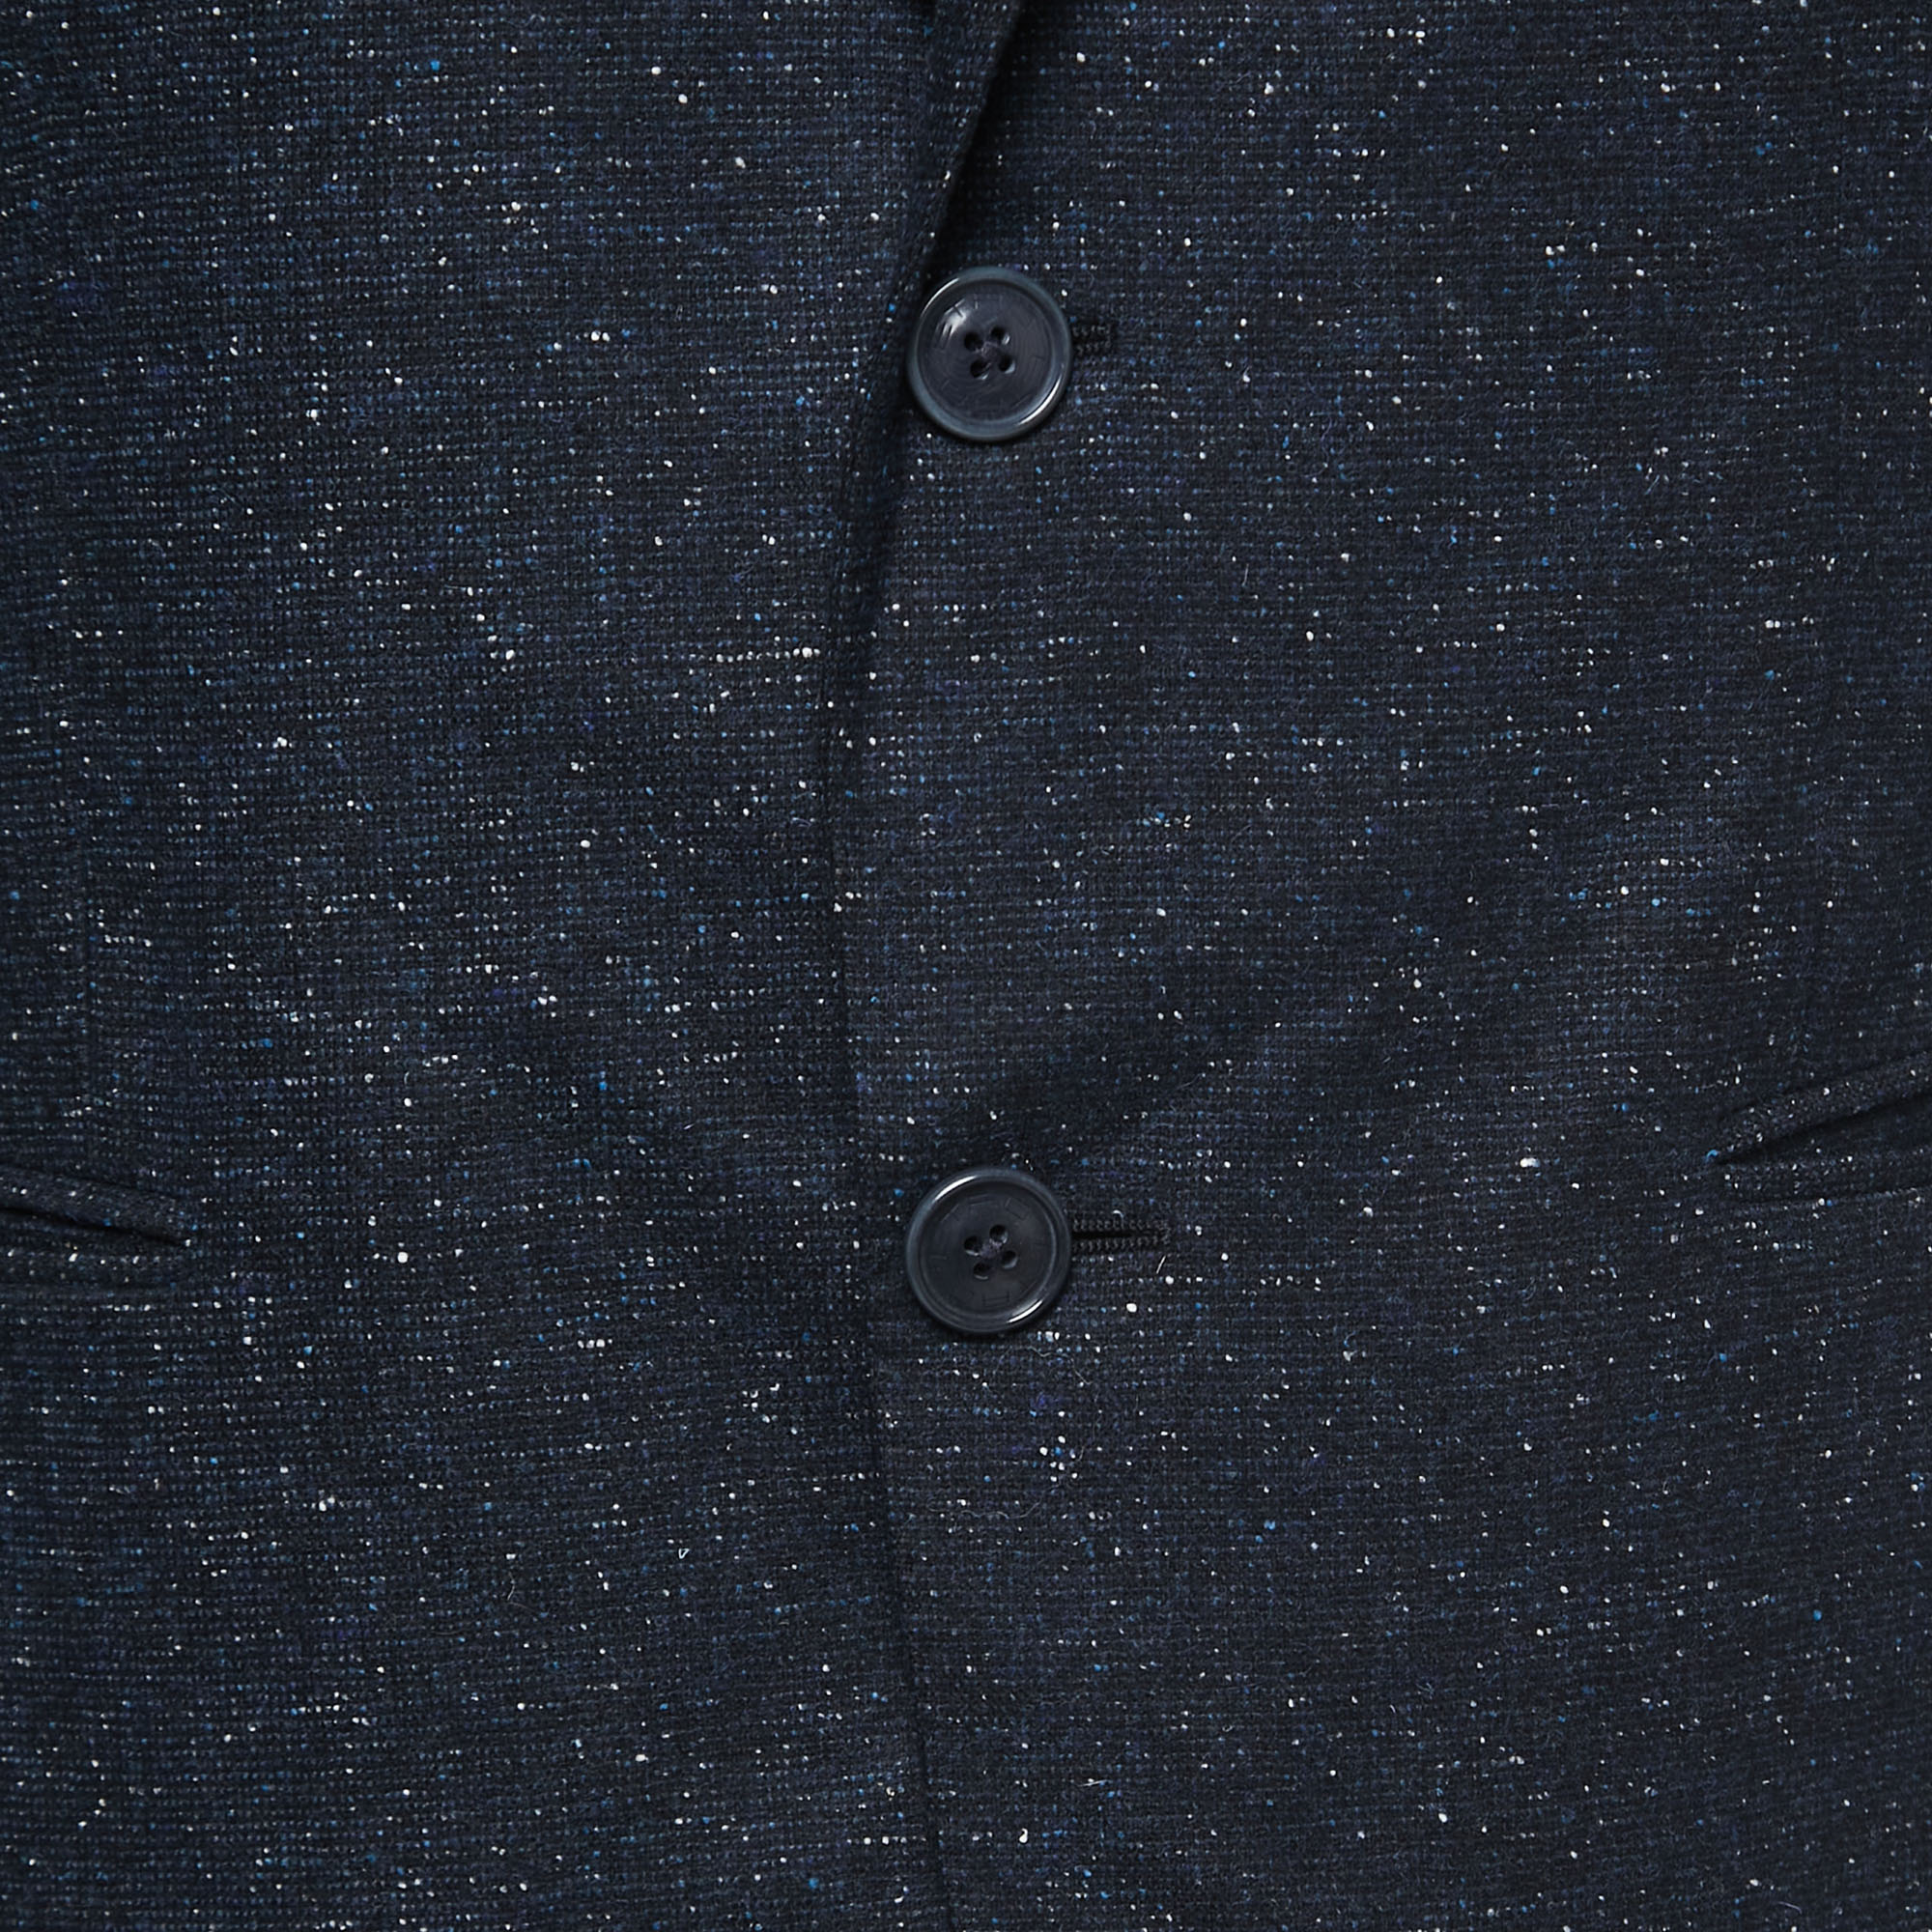 Etro Navy Blue Patterned Wool Blend Single Breasted Blazer L